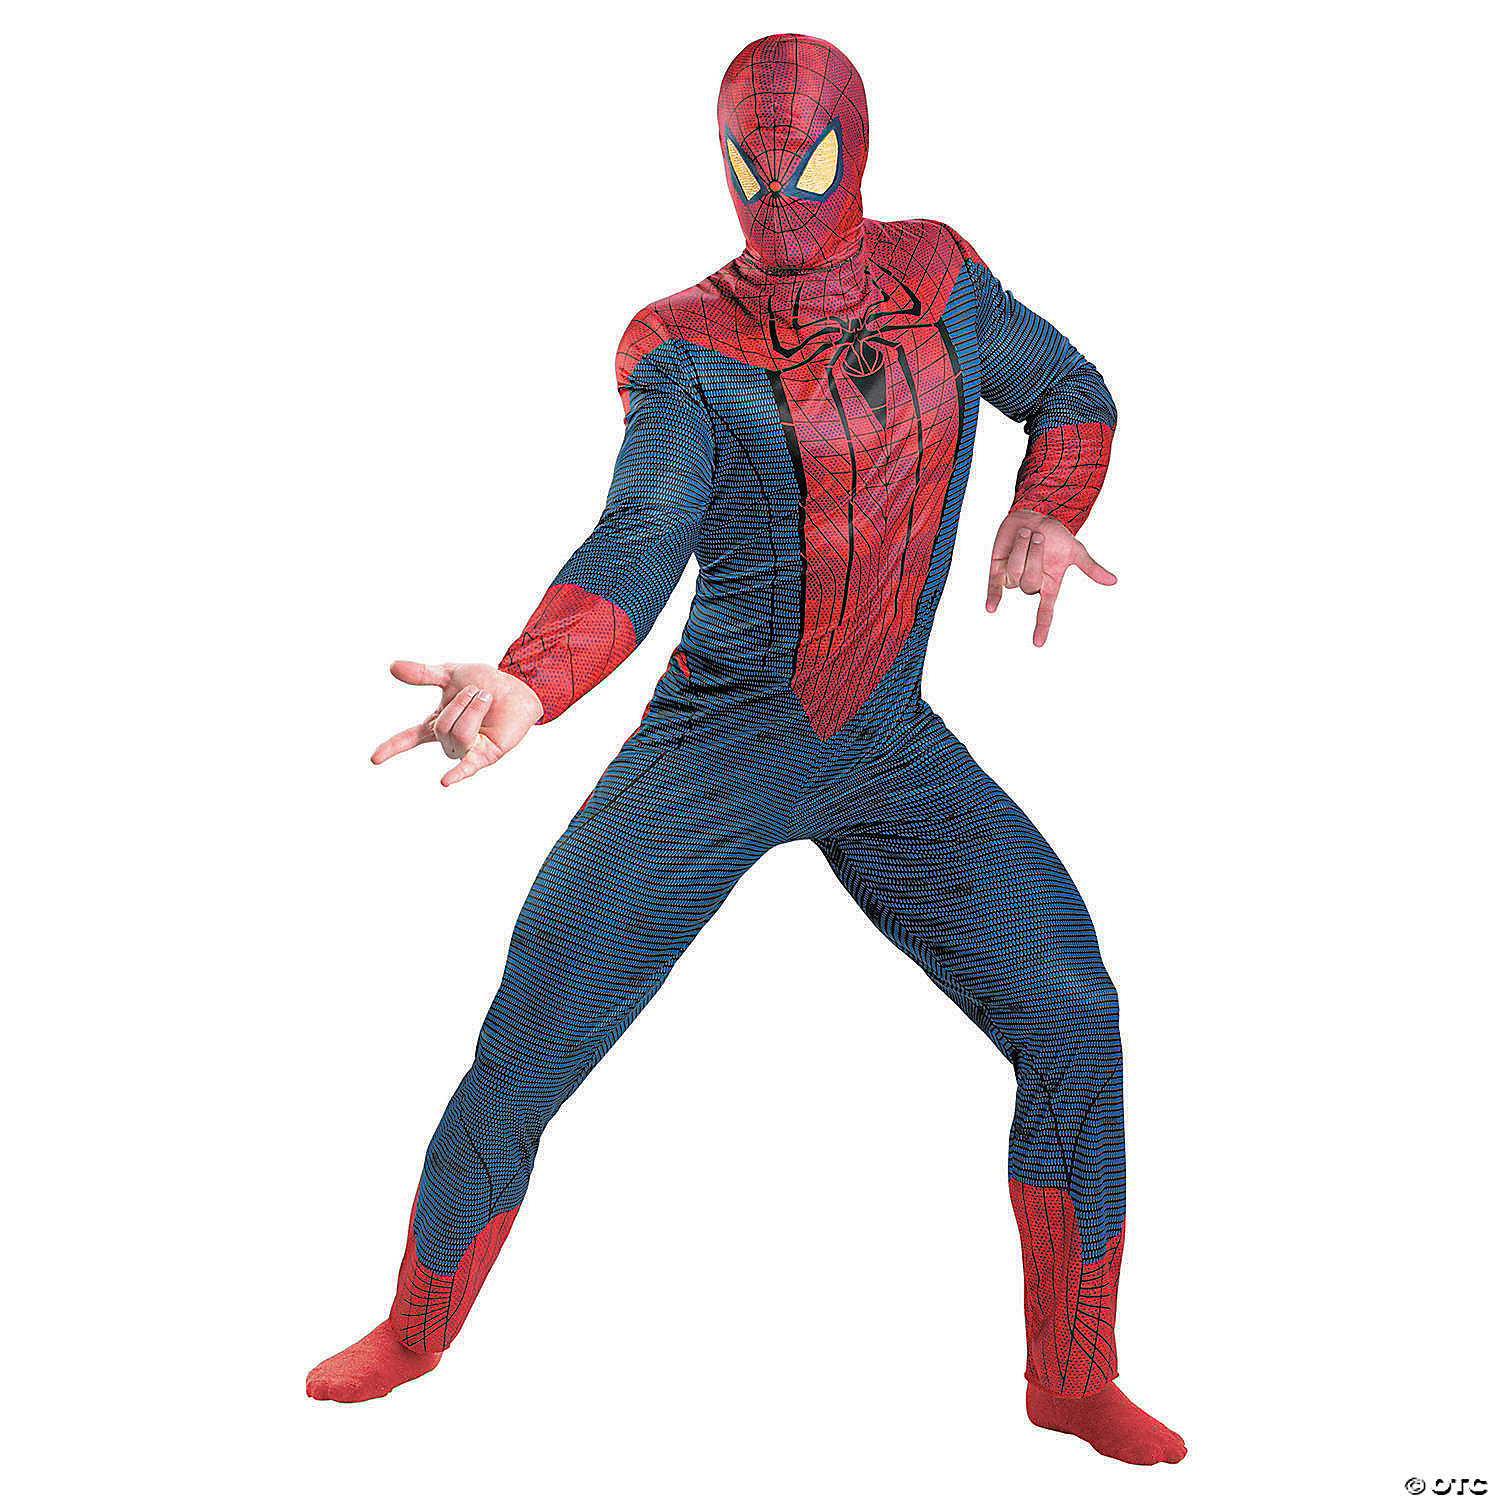 Productie vrek Mexico Men's Movie Quality Spider-Man Costume | Oriental Trading